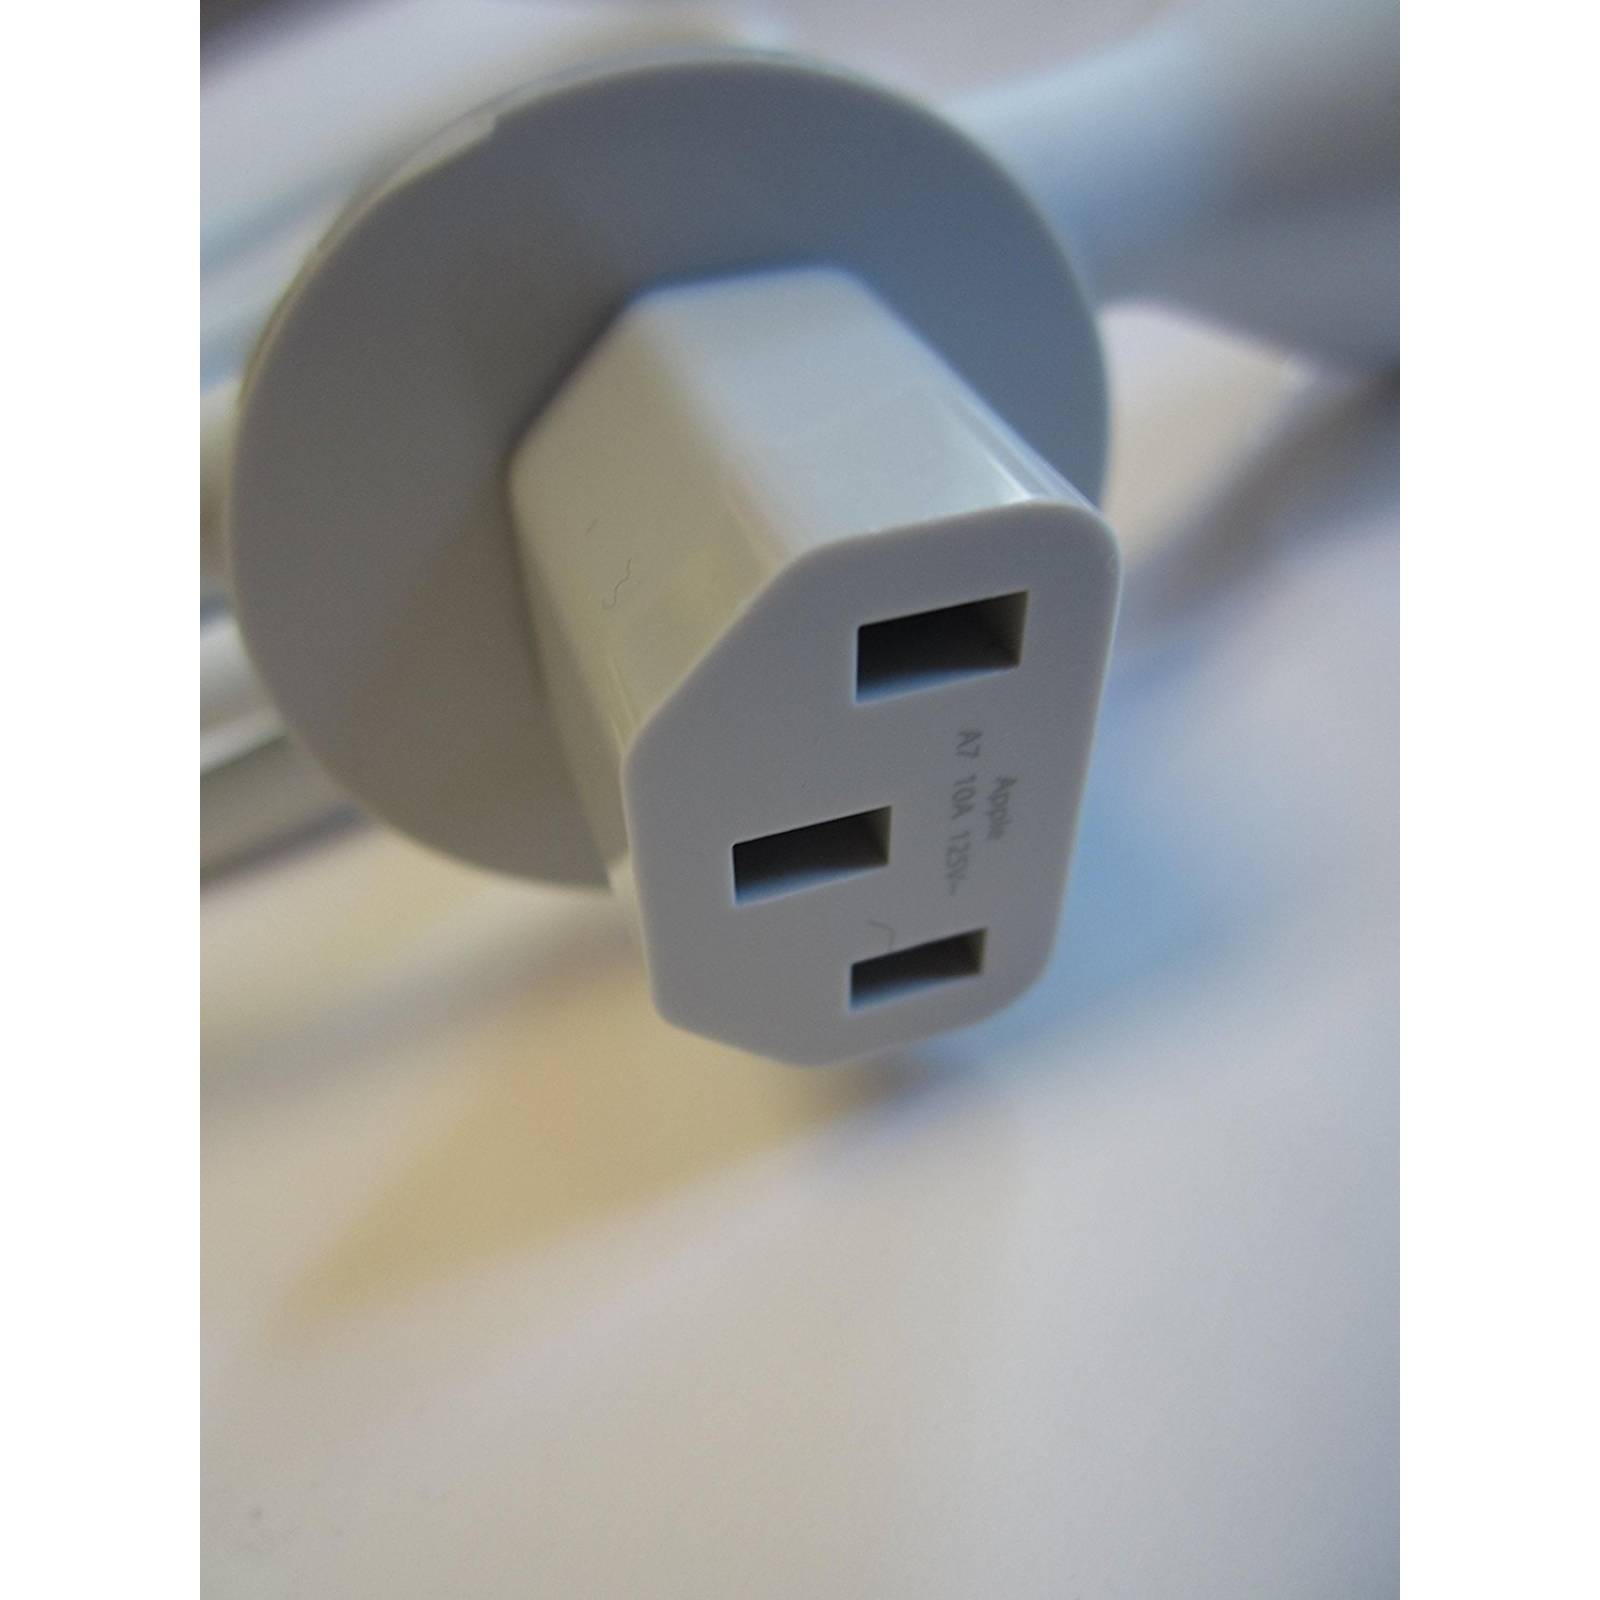 B:Apple iMac Intel Power cable 923-0285 Late 2012 2015 tardío